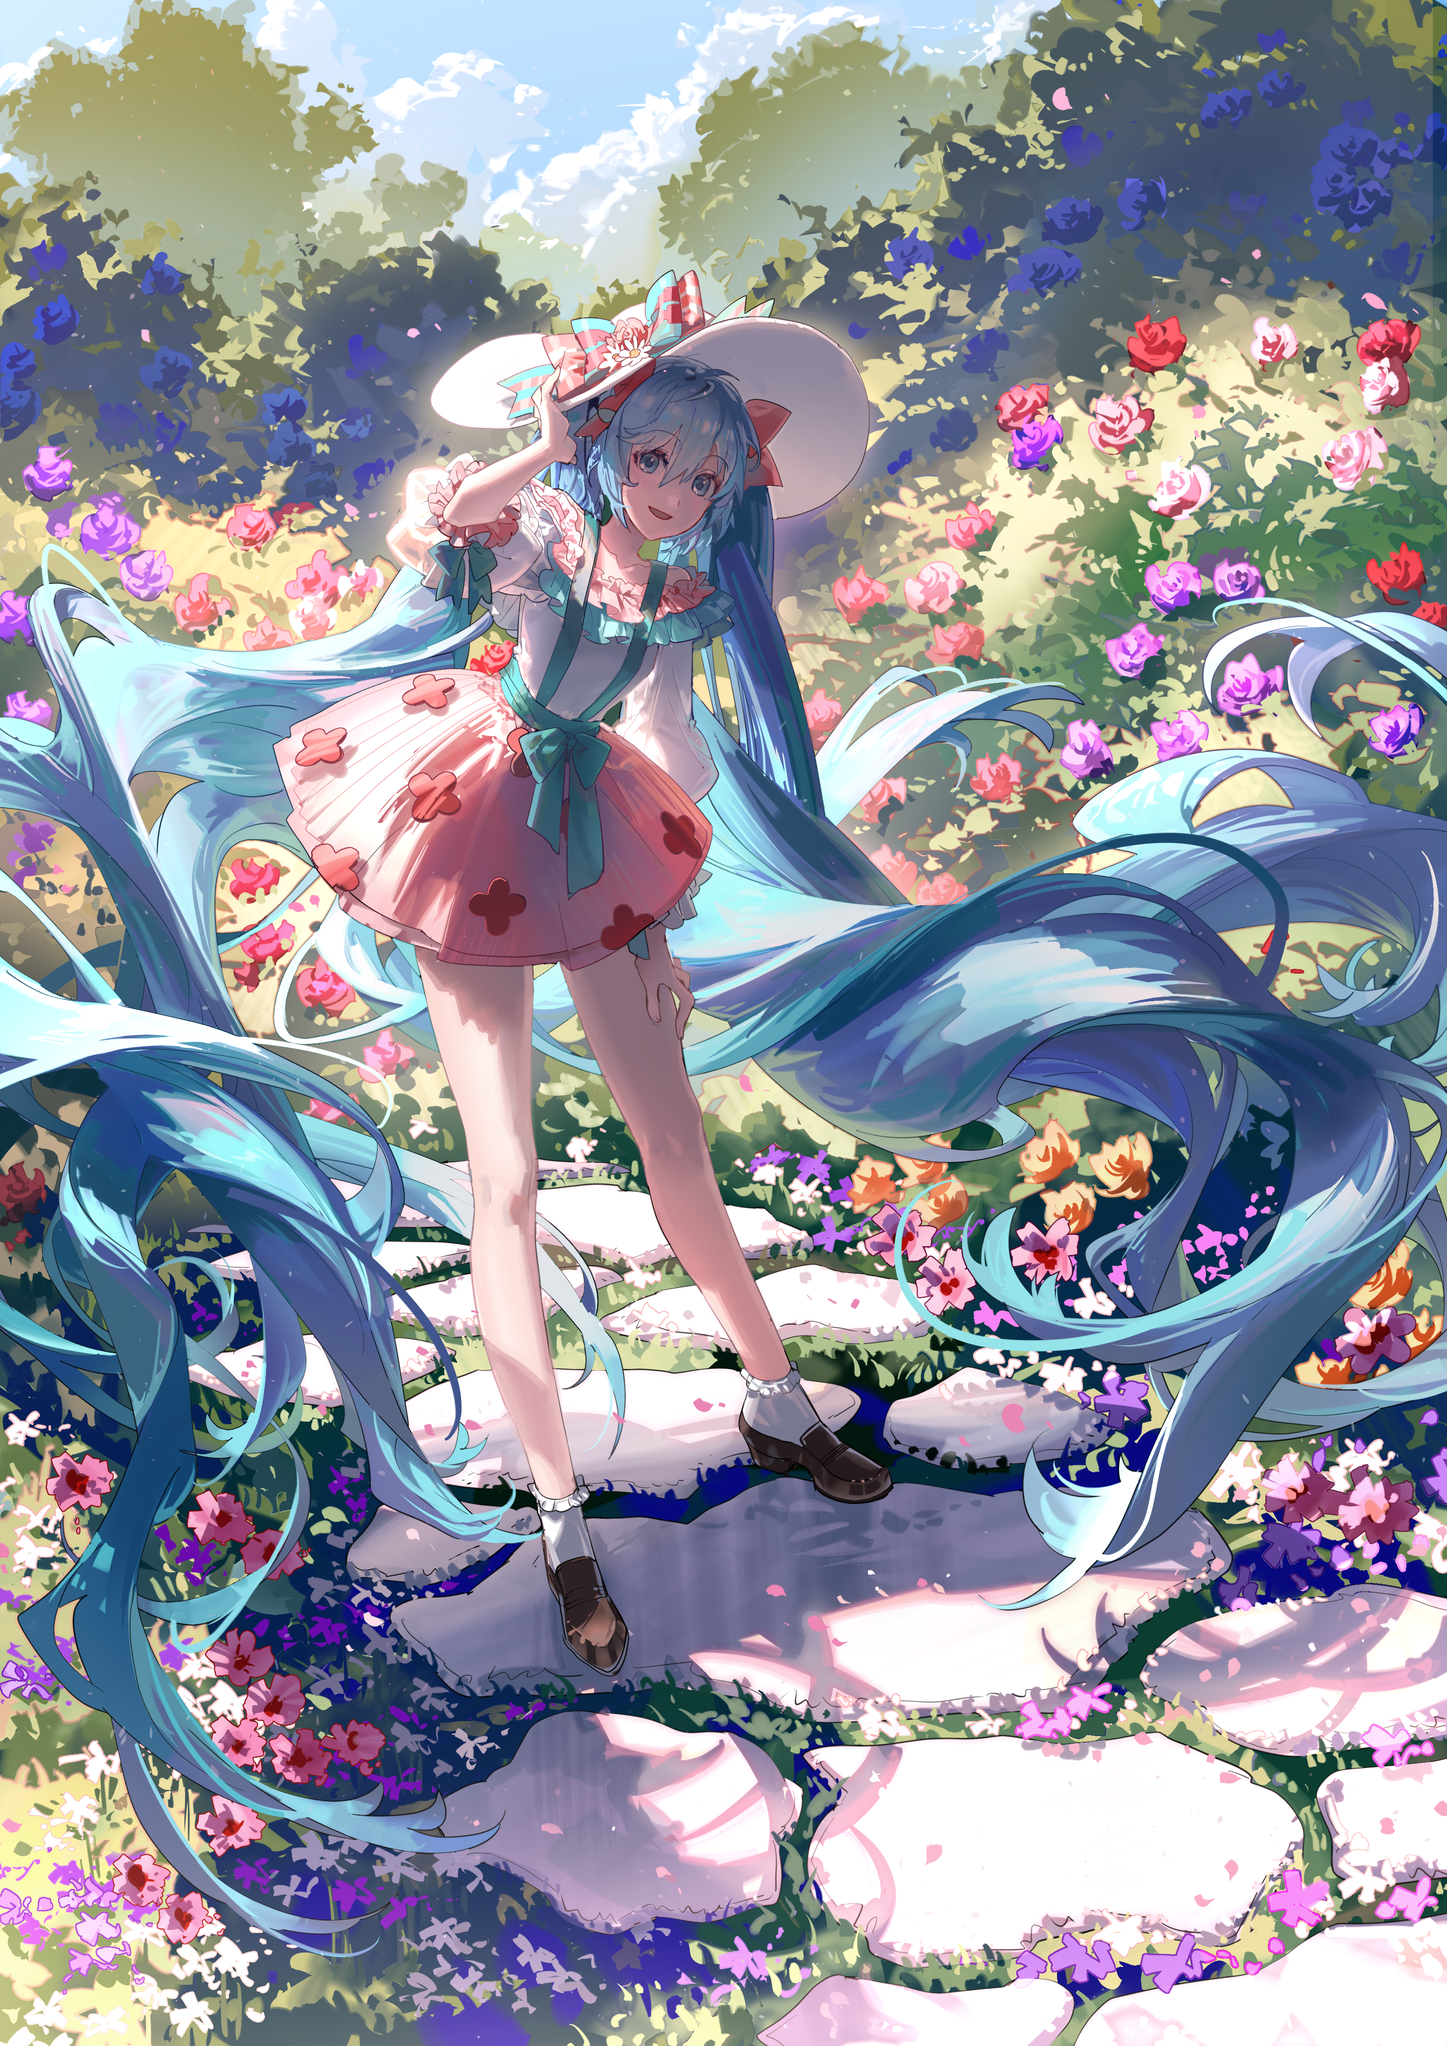 Anime 1447x2046 anime Pixiv anime girls Vocaloid Hatsune Miku sun hats path flowers blue hair blue eyes long hair twintails standing clouds sunlight dress portrait display Shuno (artist)